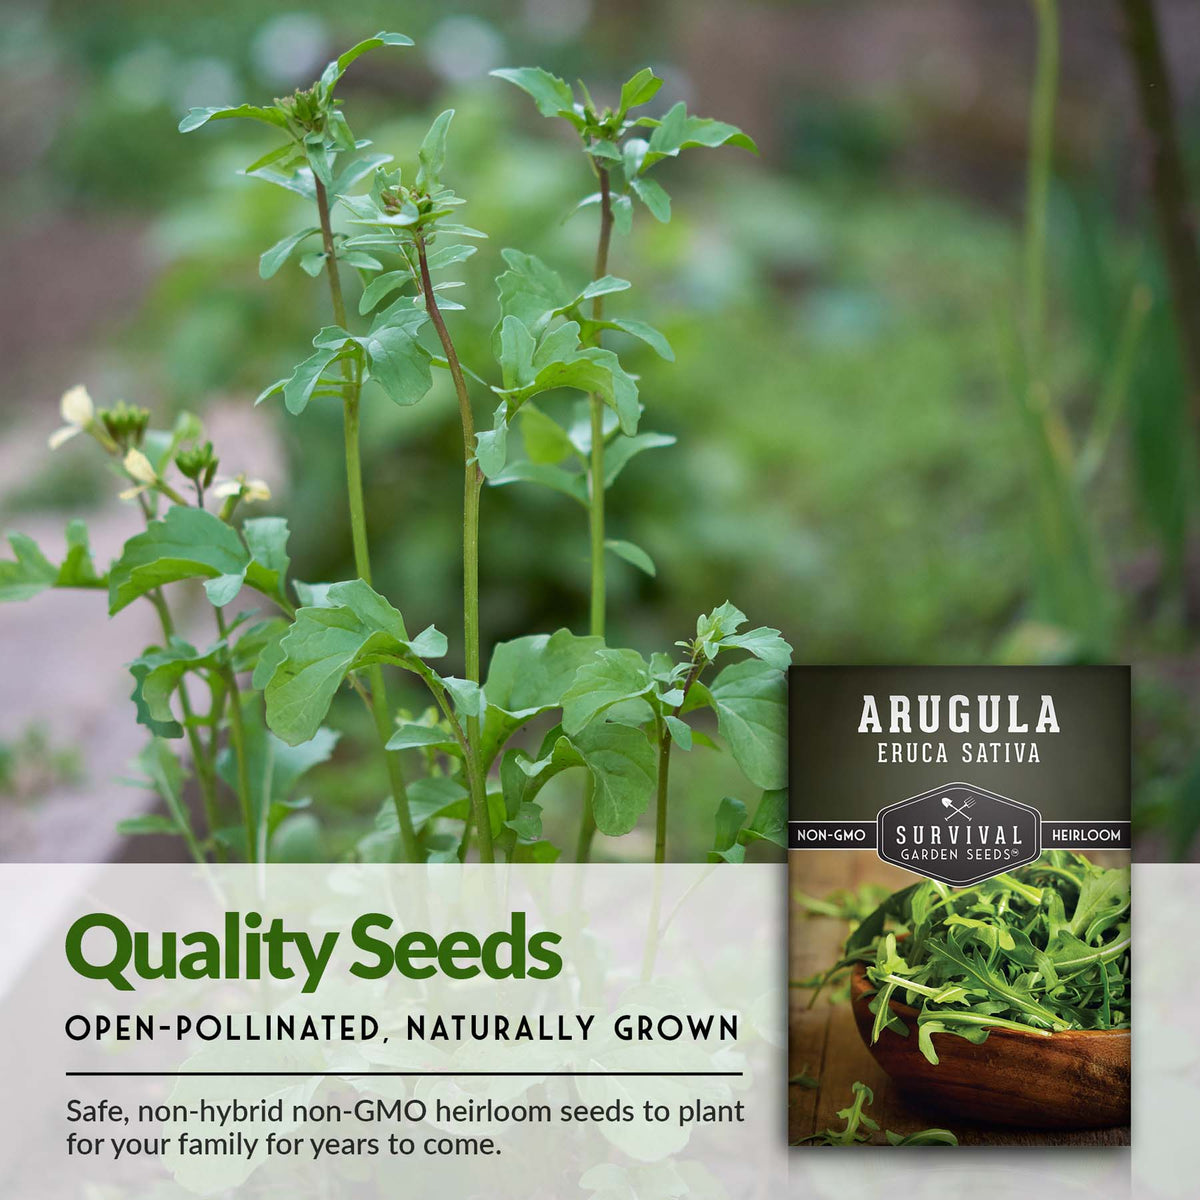 Naturally open-pollinated heirloom arugula seeds